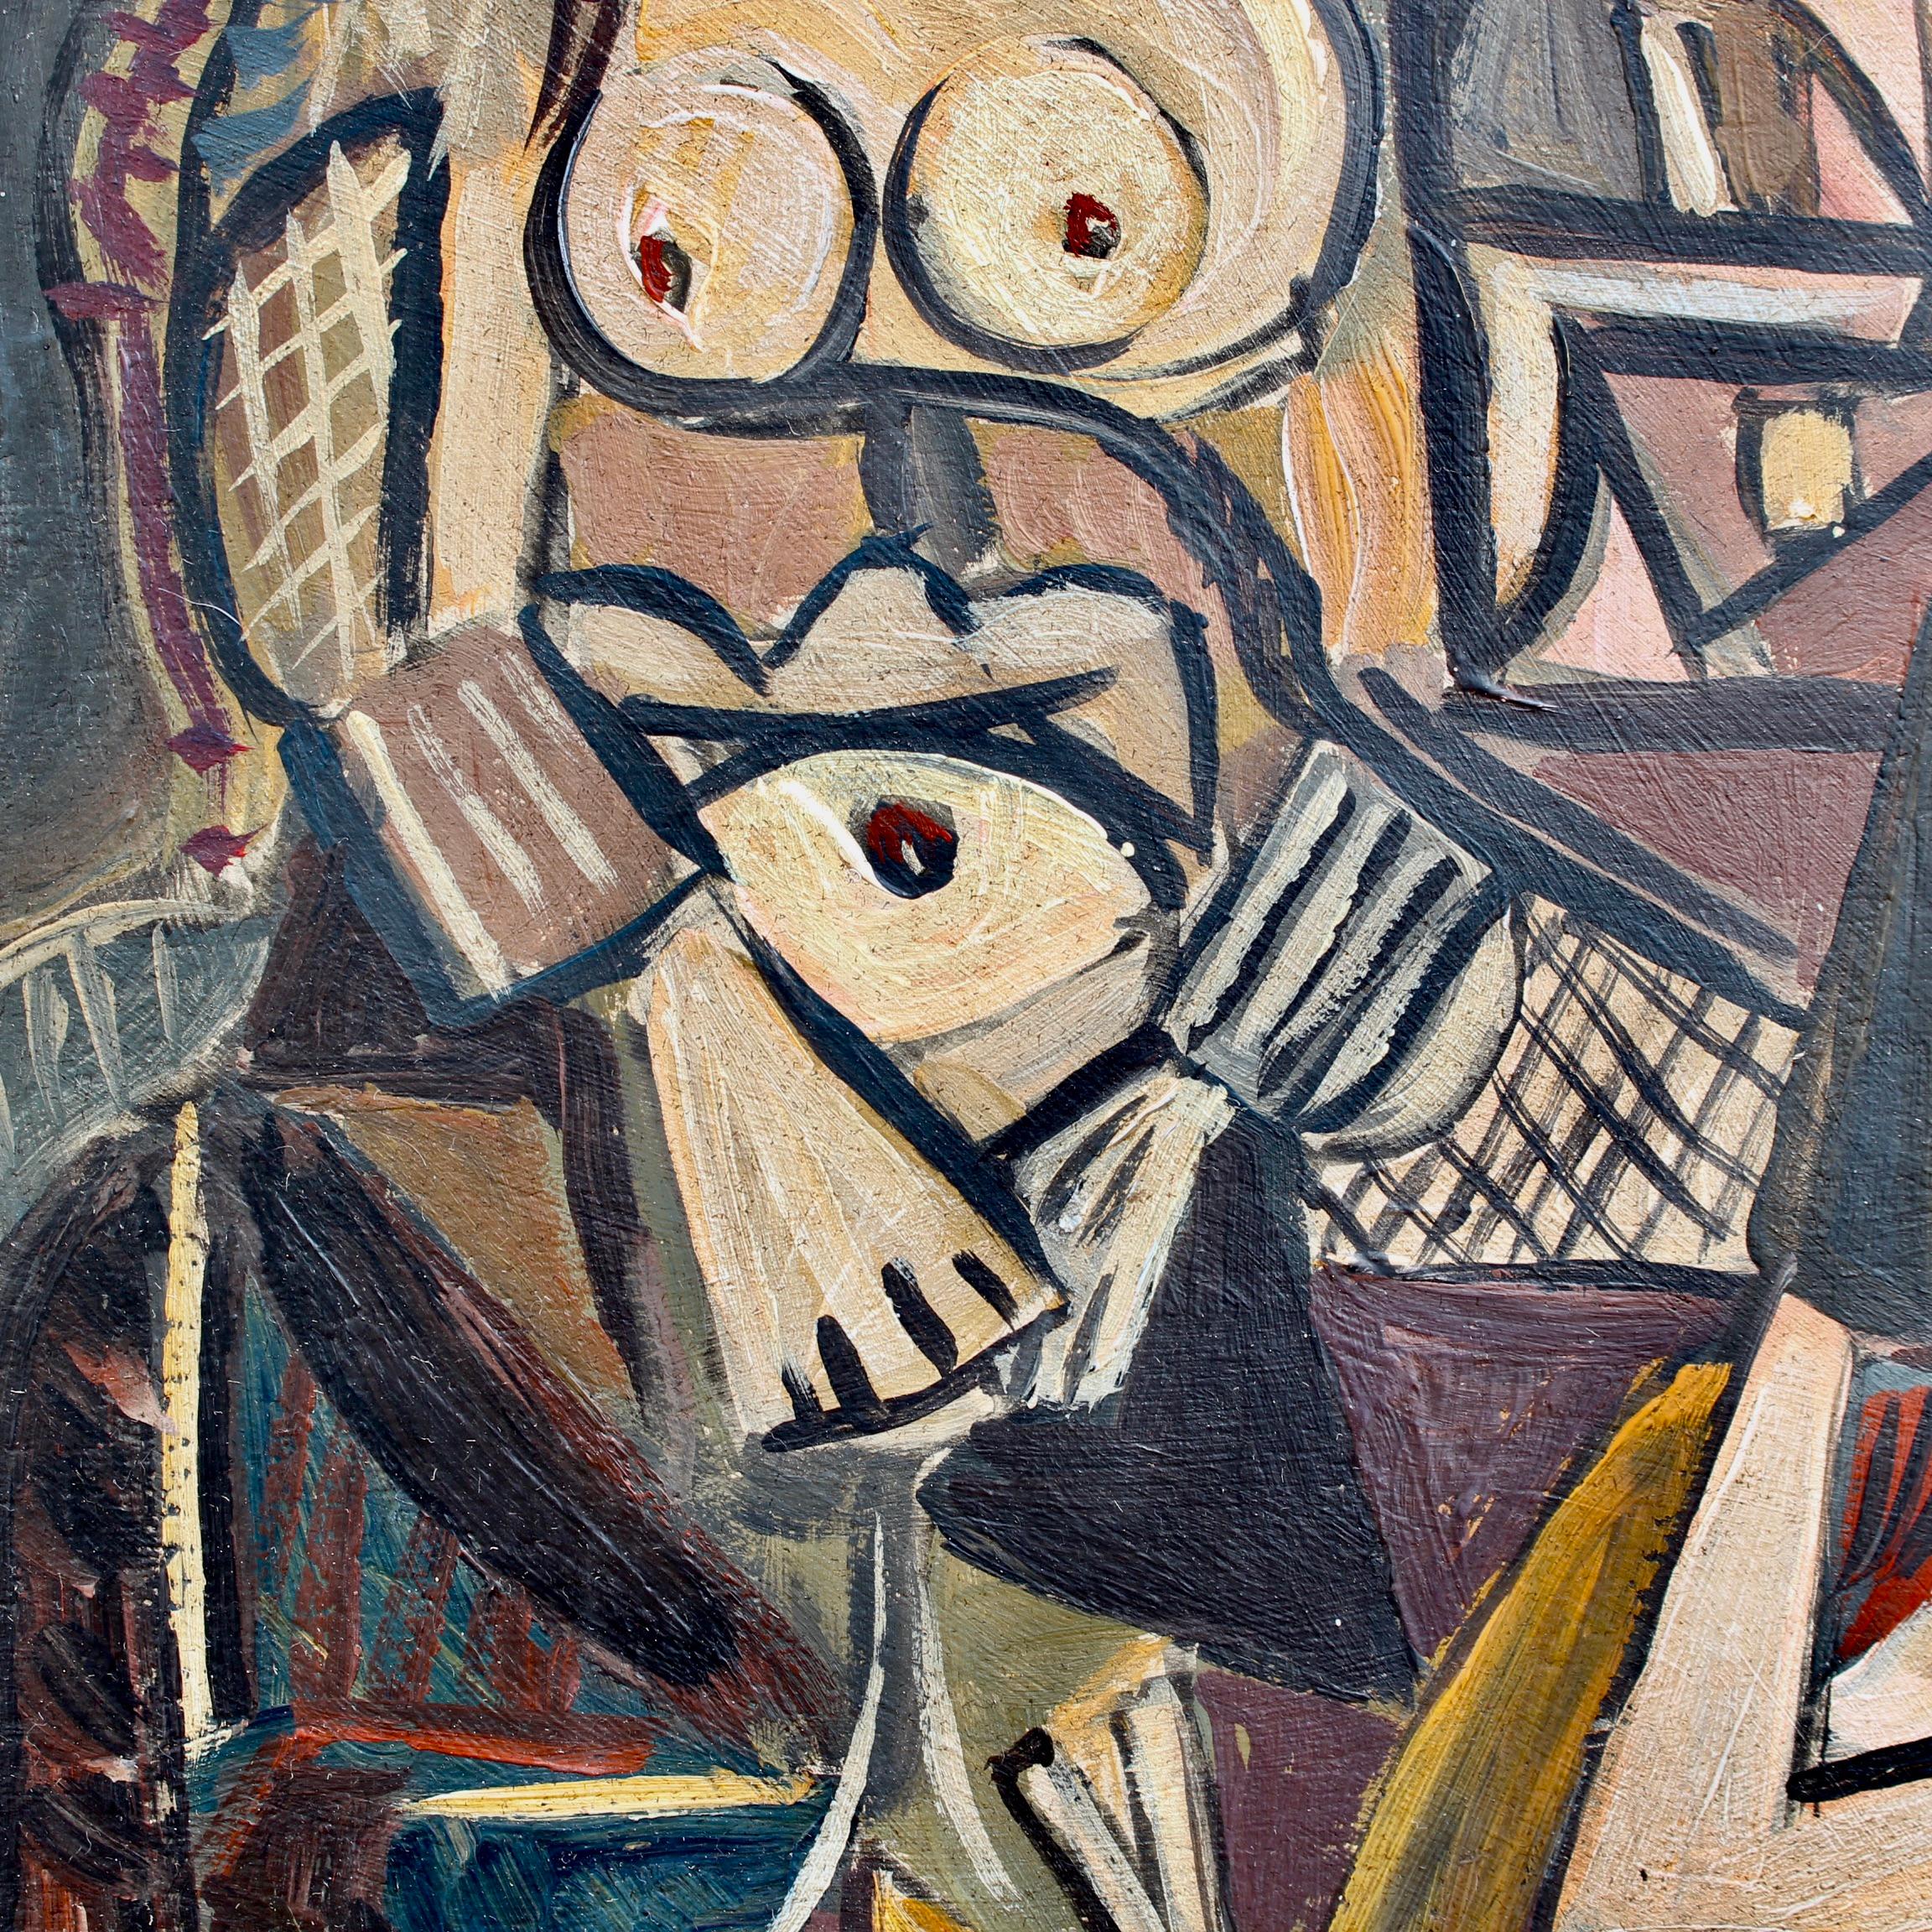 'Homage to Picasso's Les Femmes d'Alger' by Jones  4